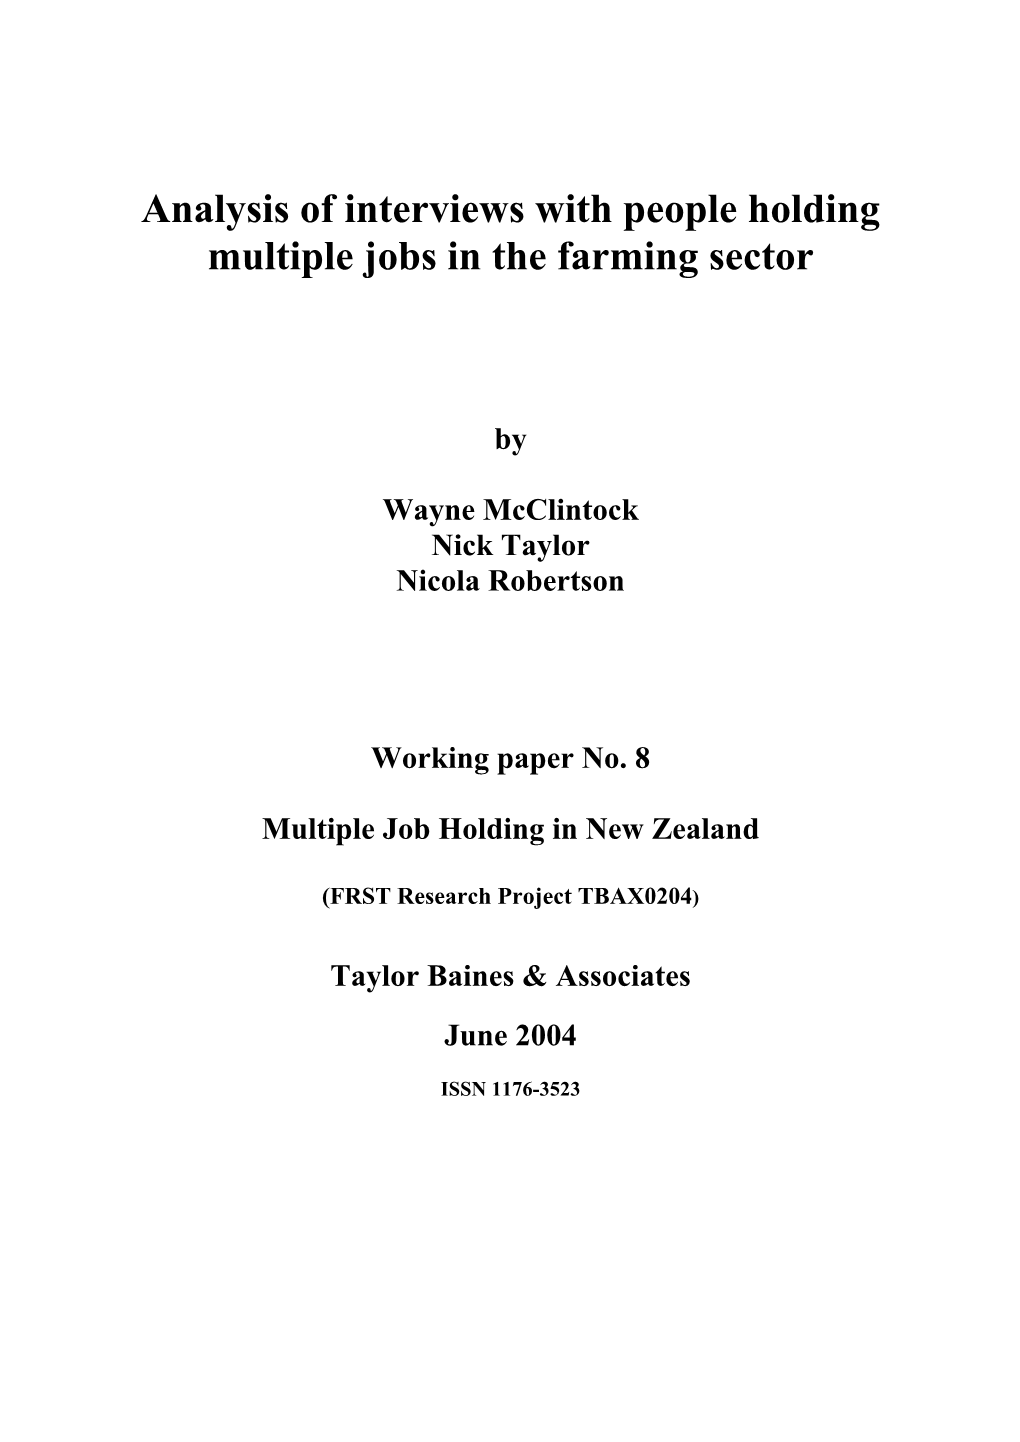 Analysis of Mjh Farming Sector Interviews